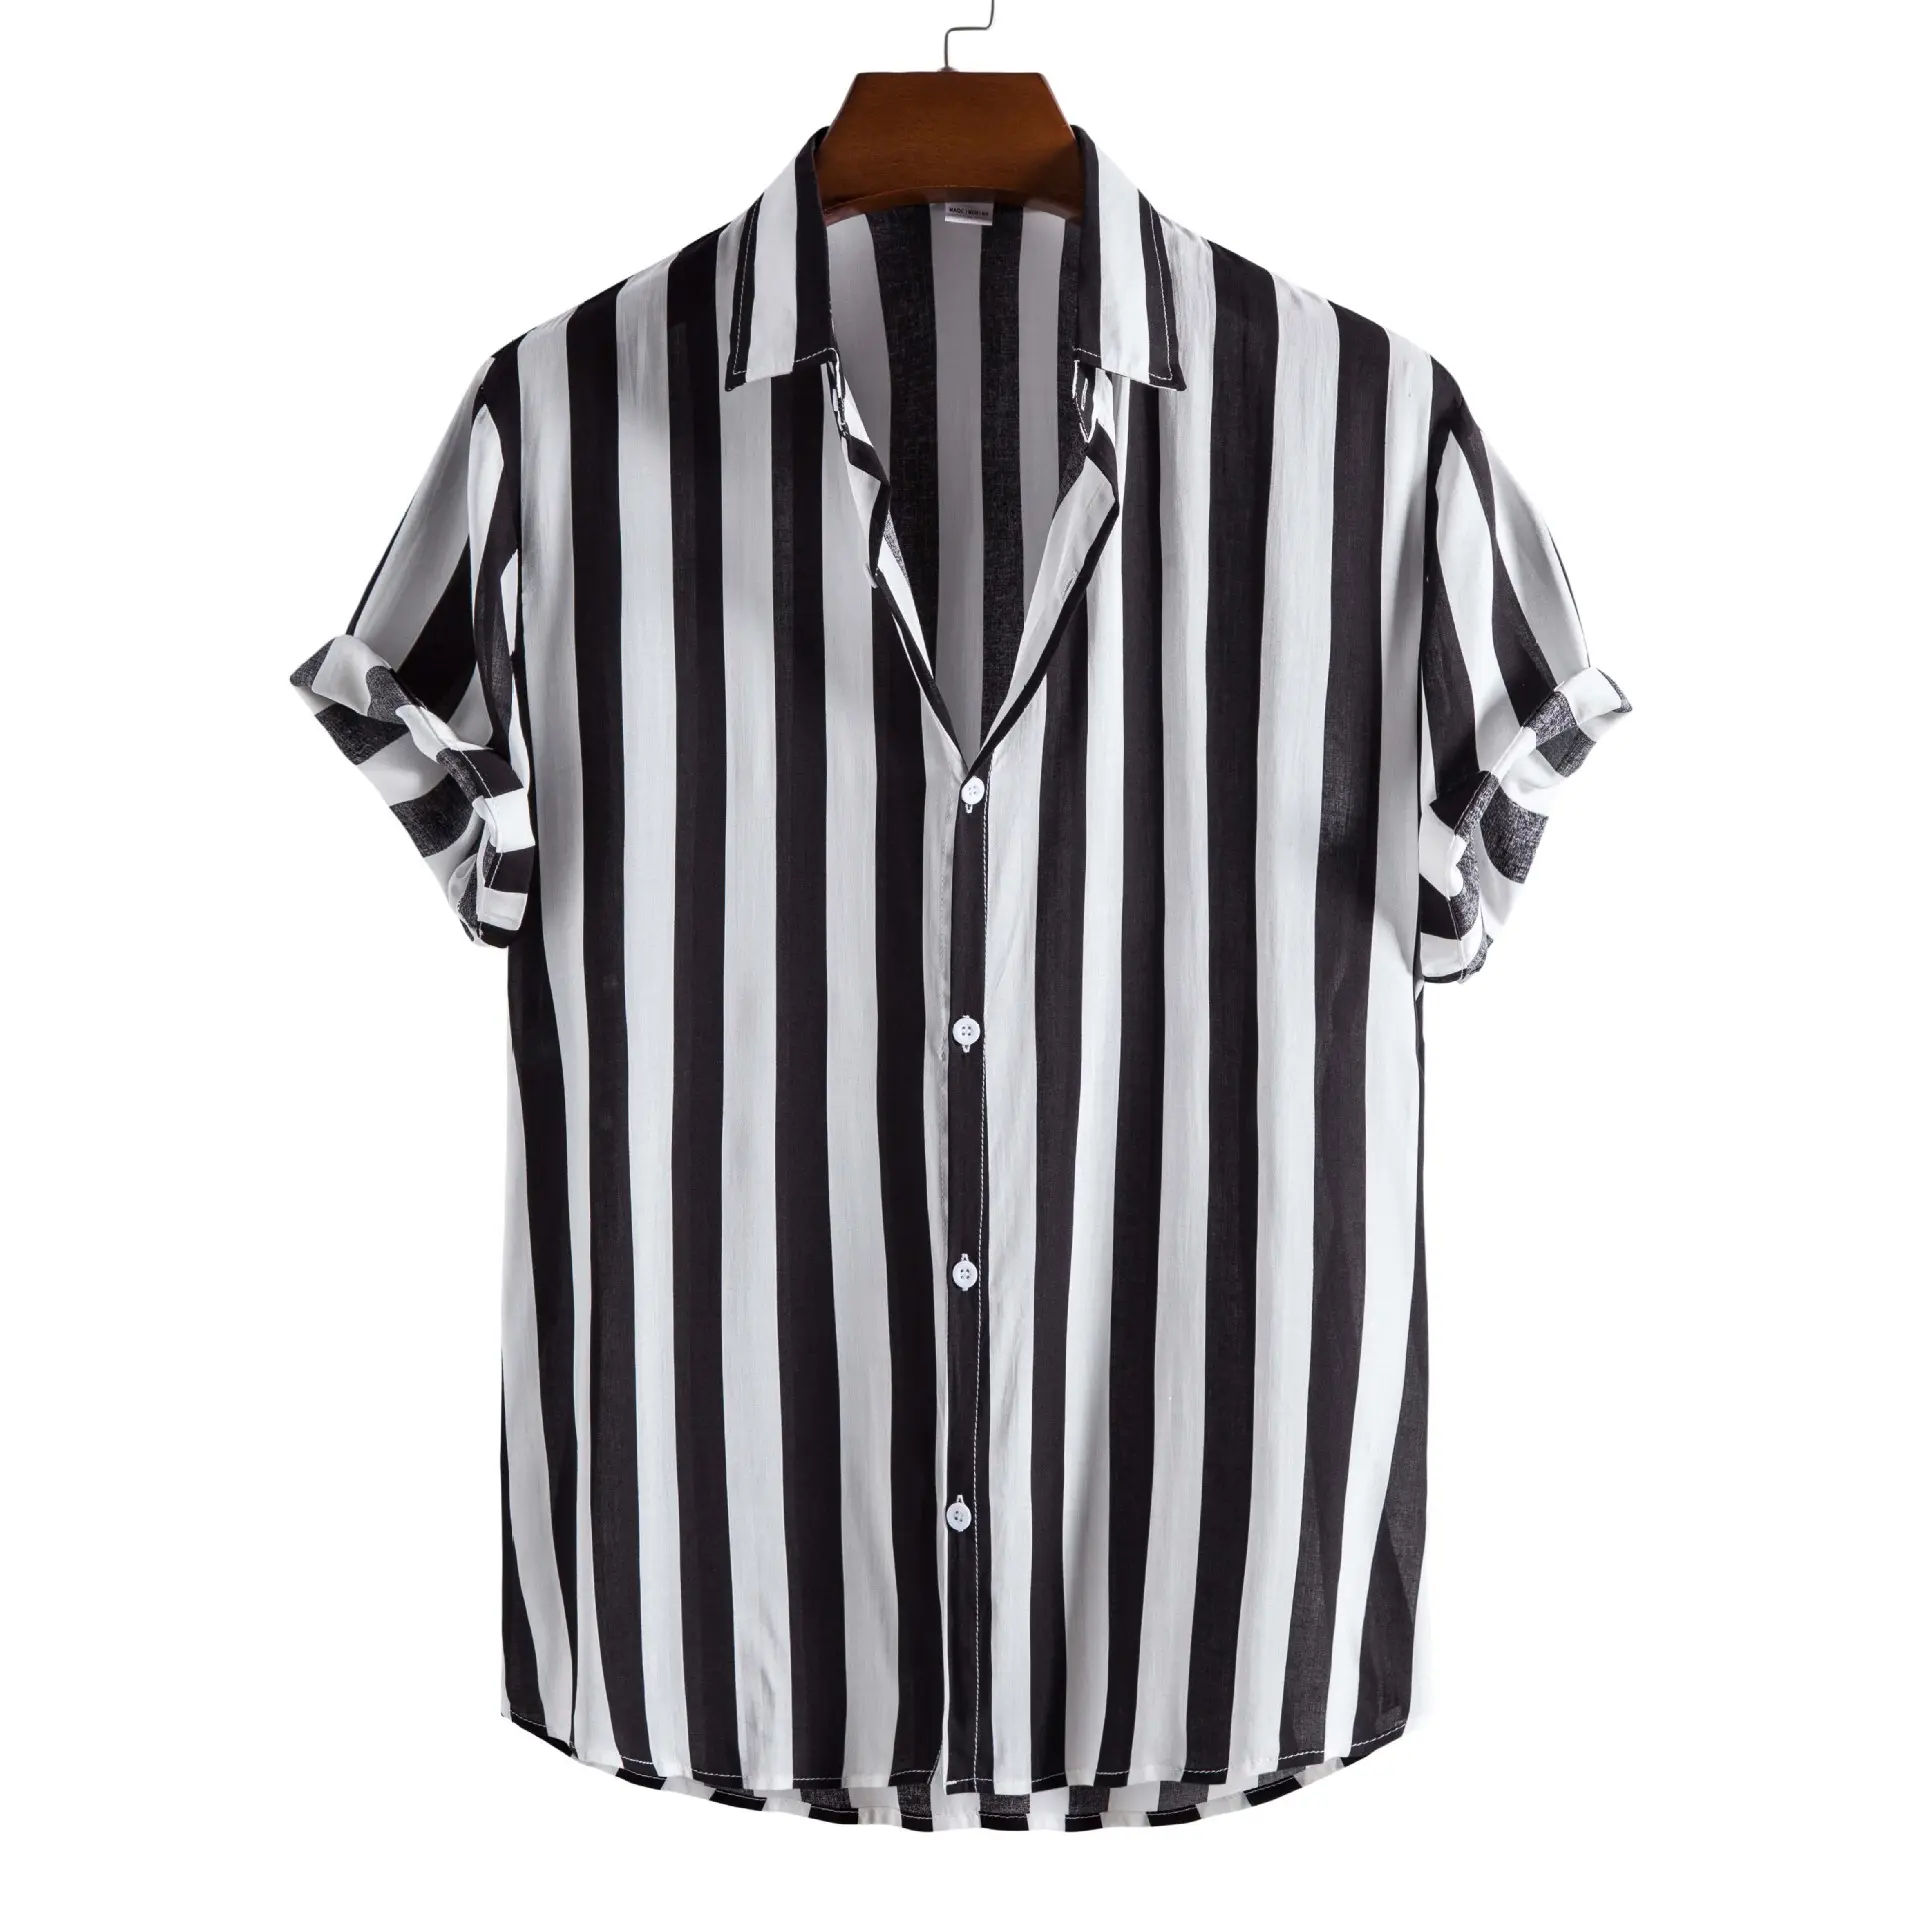 Striped Shirts for Men Short Sleeve Top Retro Stripe Pattern Men Casual Shirts camisas homme camisas de hombre